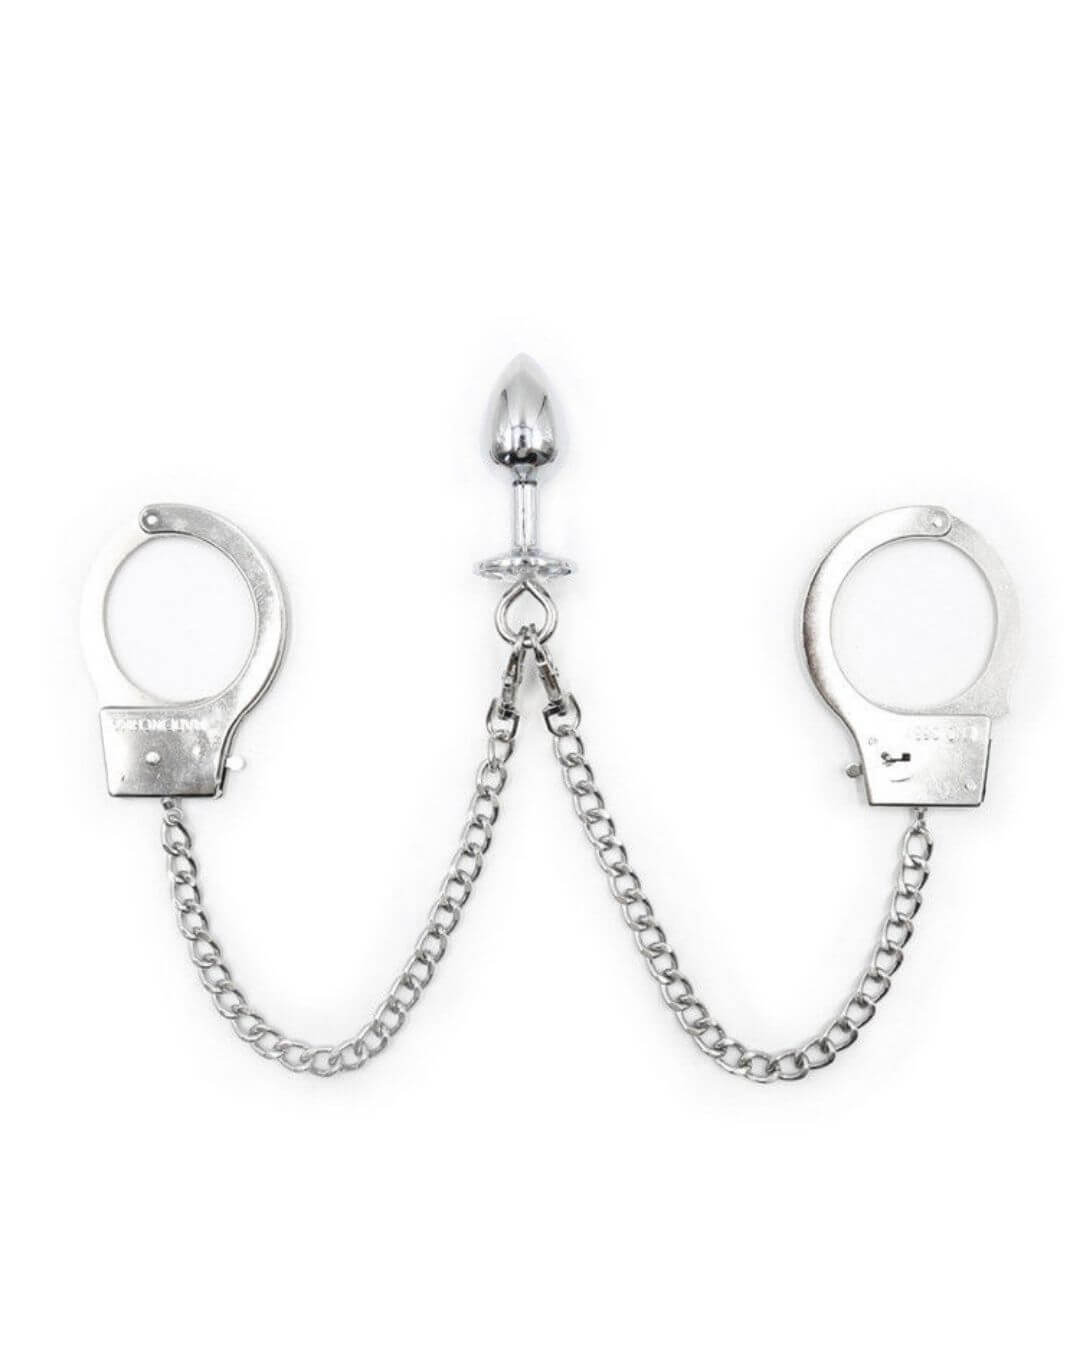 Metal Handcuffs Tethered Bondage Plug